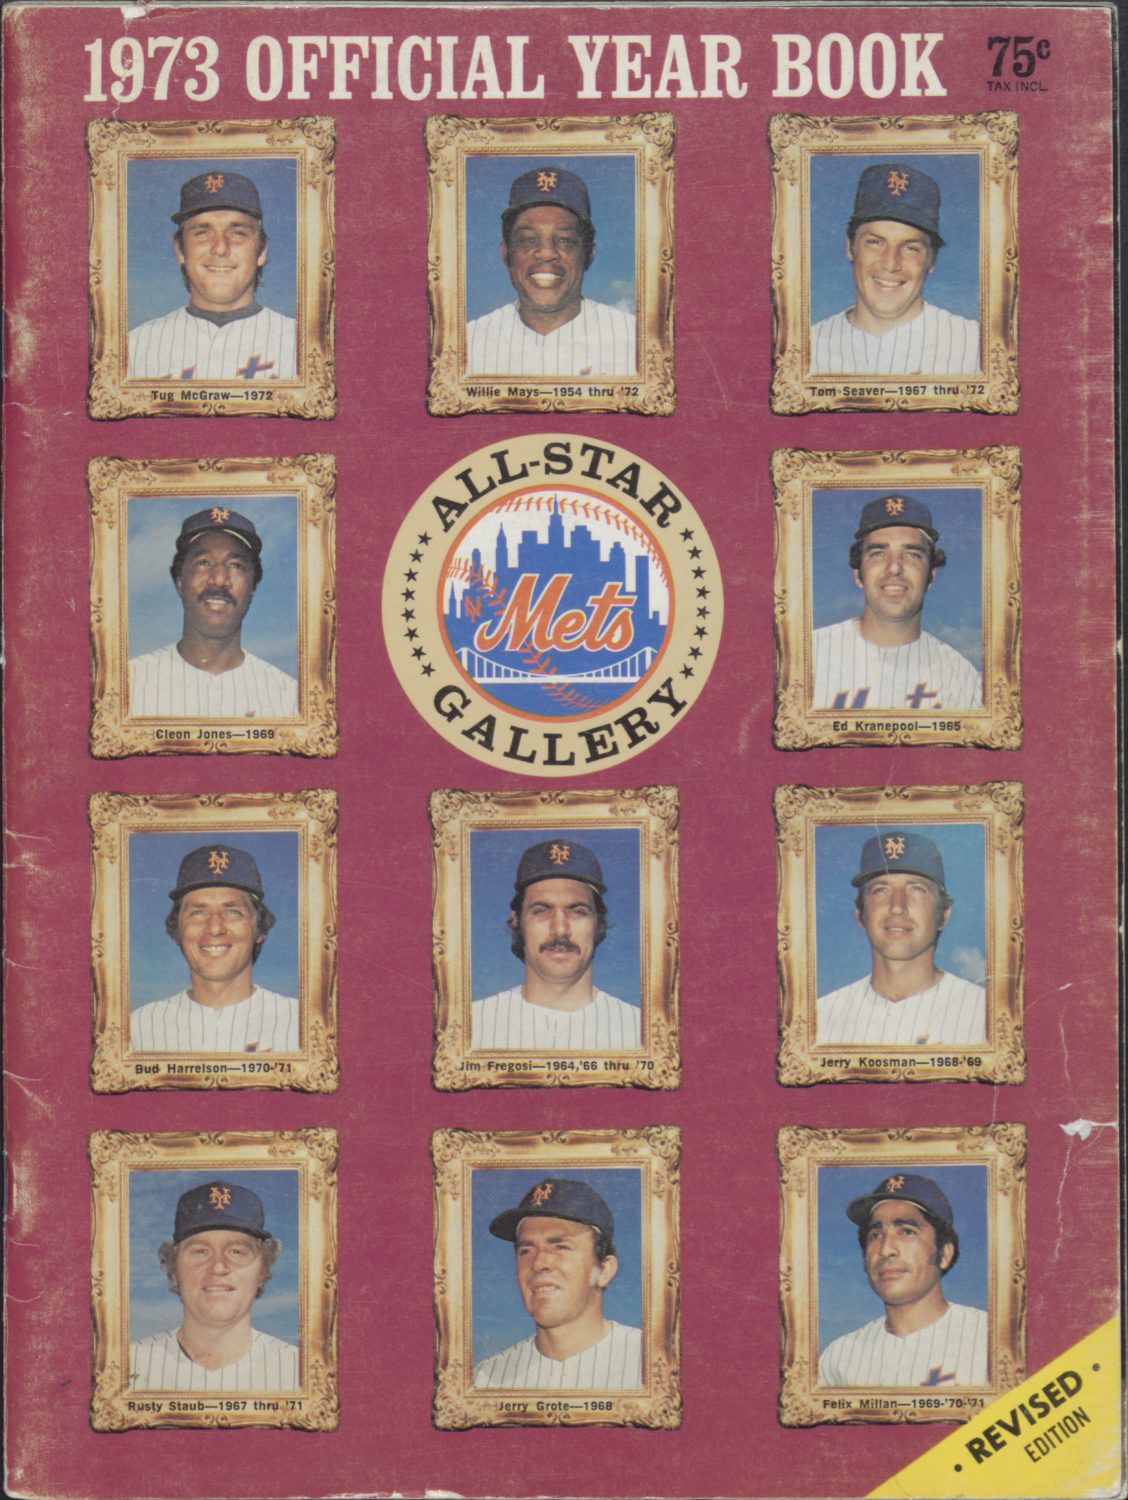 1973 Mets Yearbook: All-Star Gallery